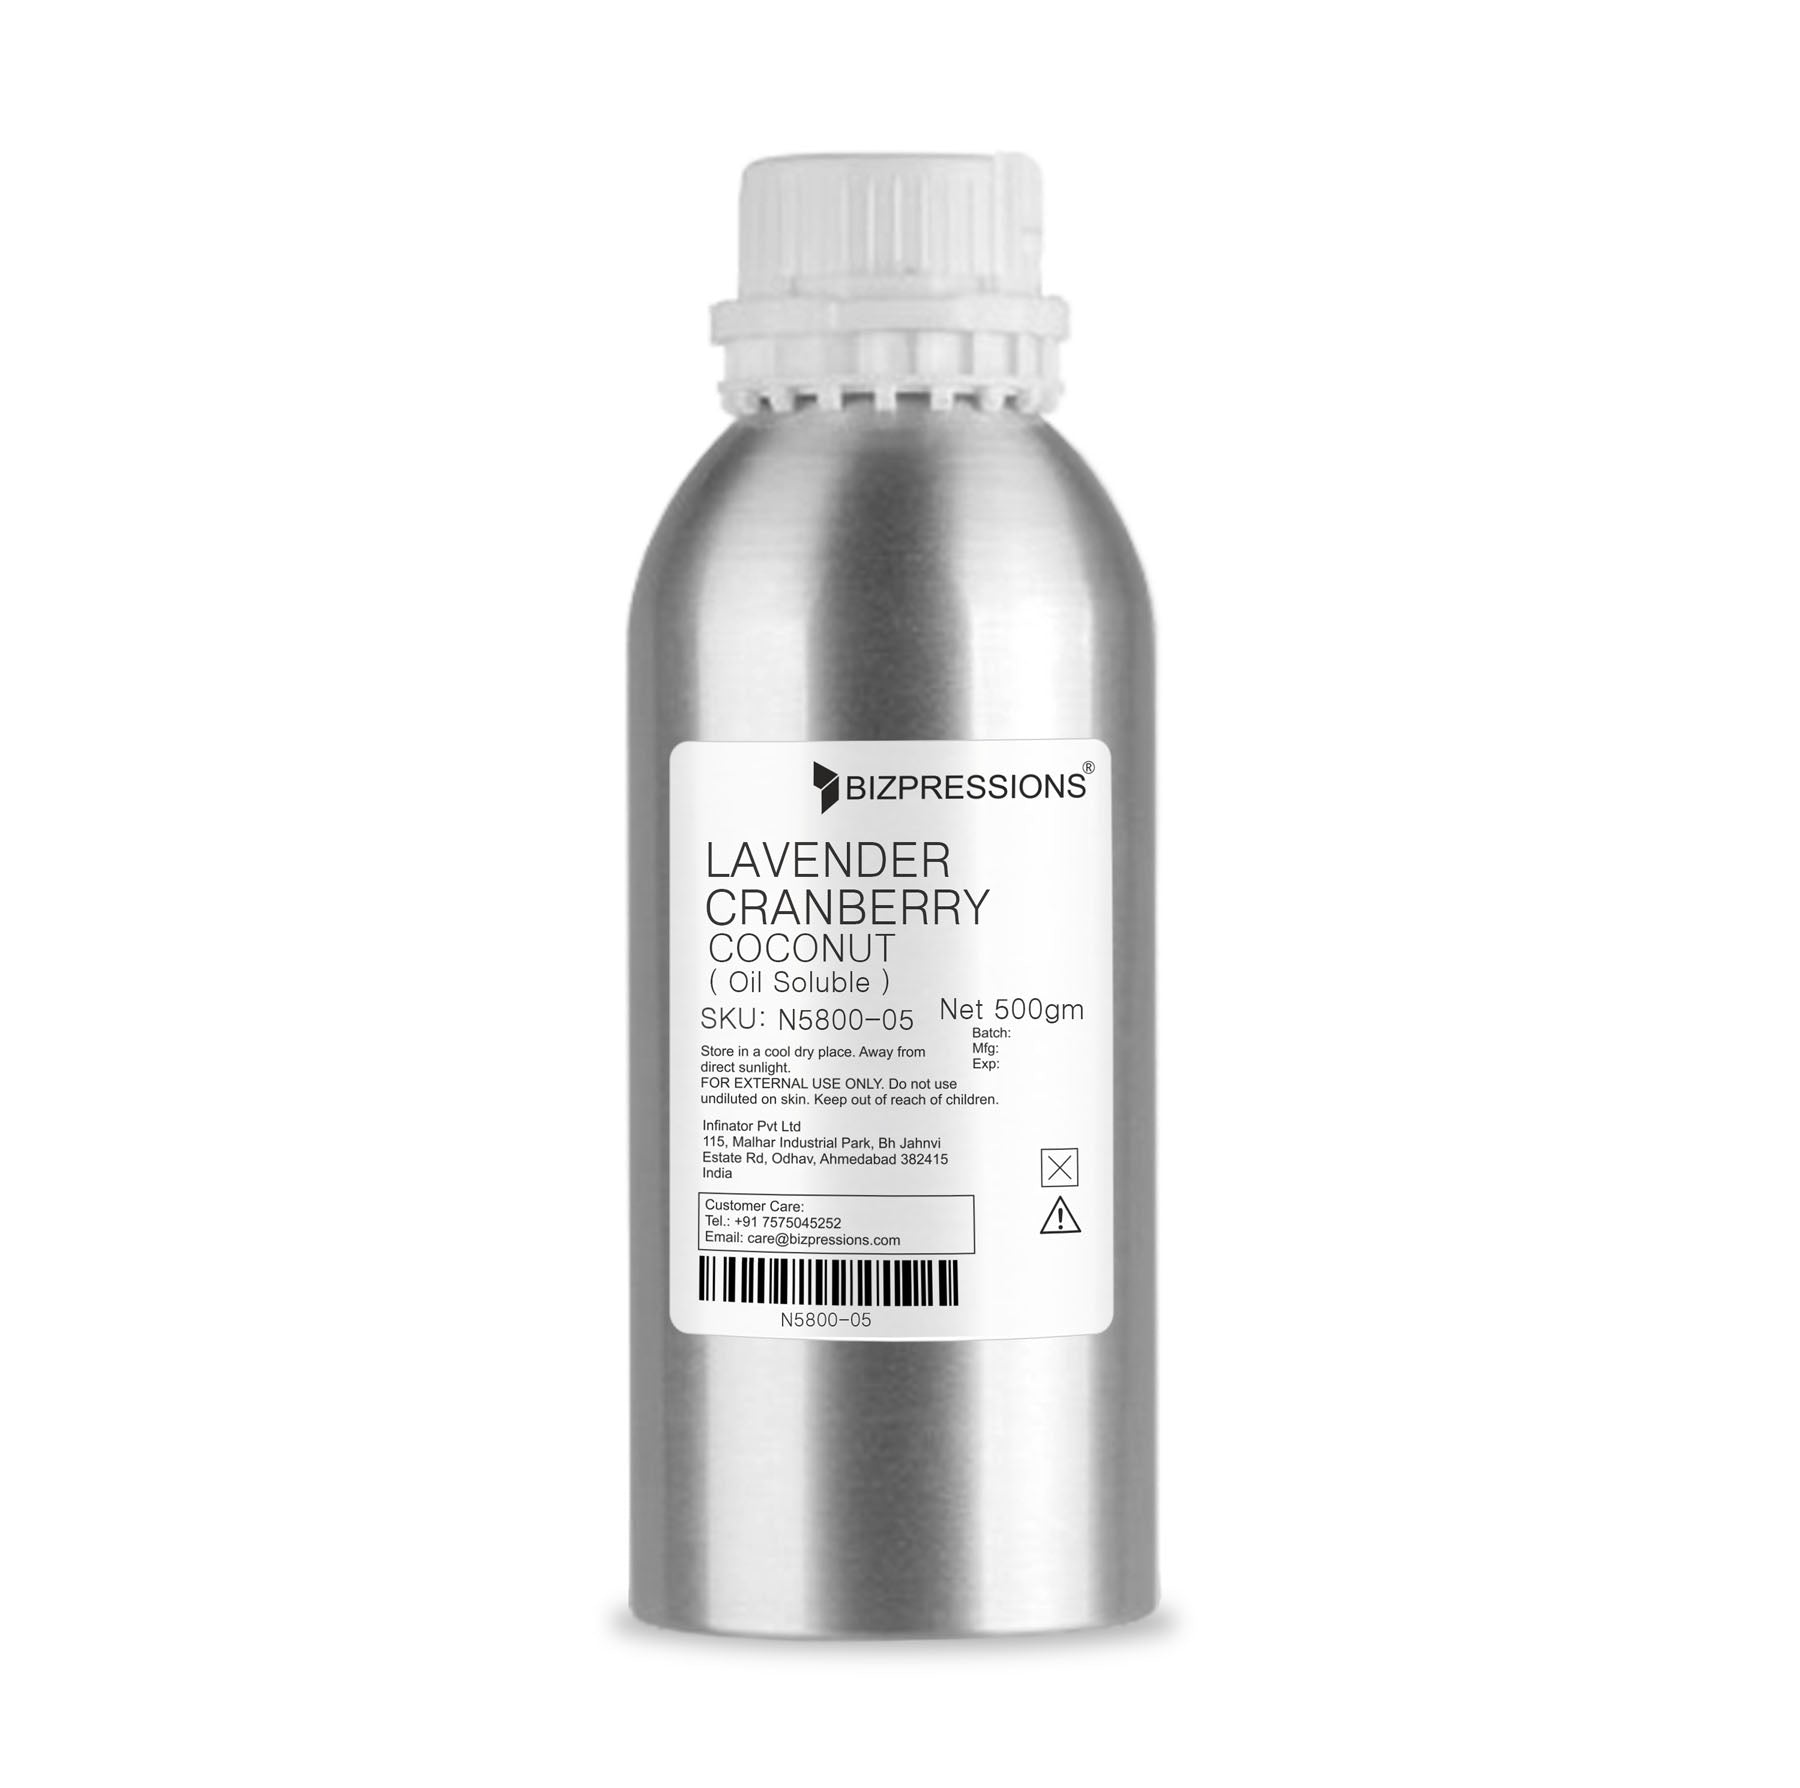 LAVENDER CRANBERRY COCONUT - Fragrance ( Oil Soluble ) - 500 gm